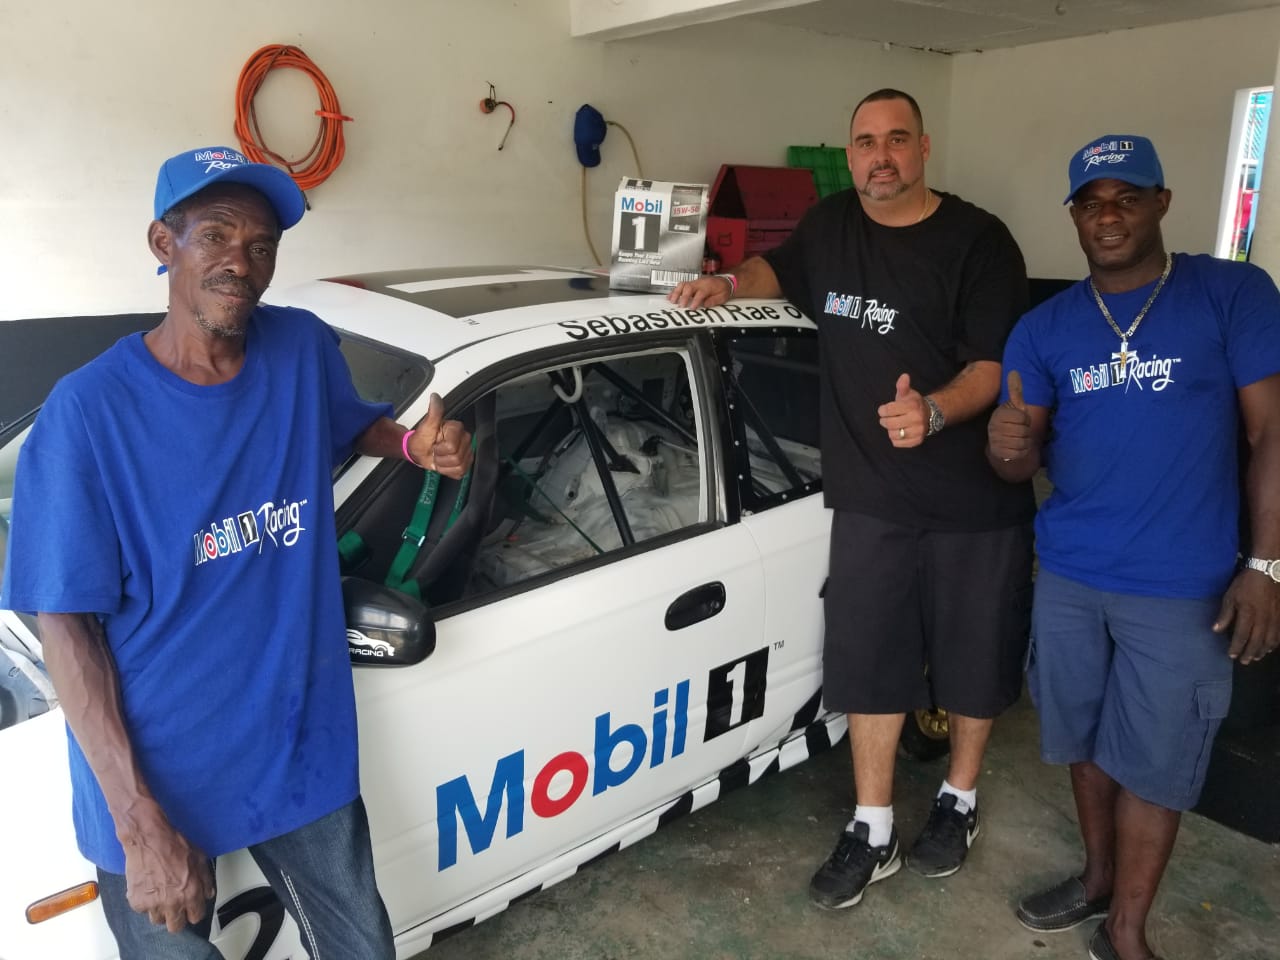 IMCA Jamaica sponsors RaceCar Driver Sebastian Rae to promote Mobil 1 Lubricants.